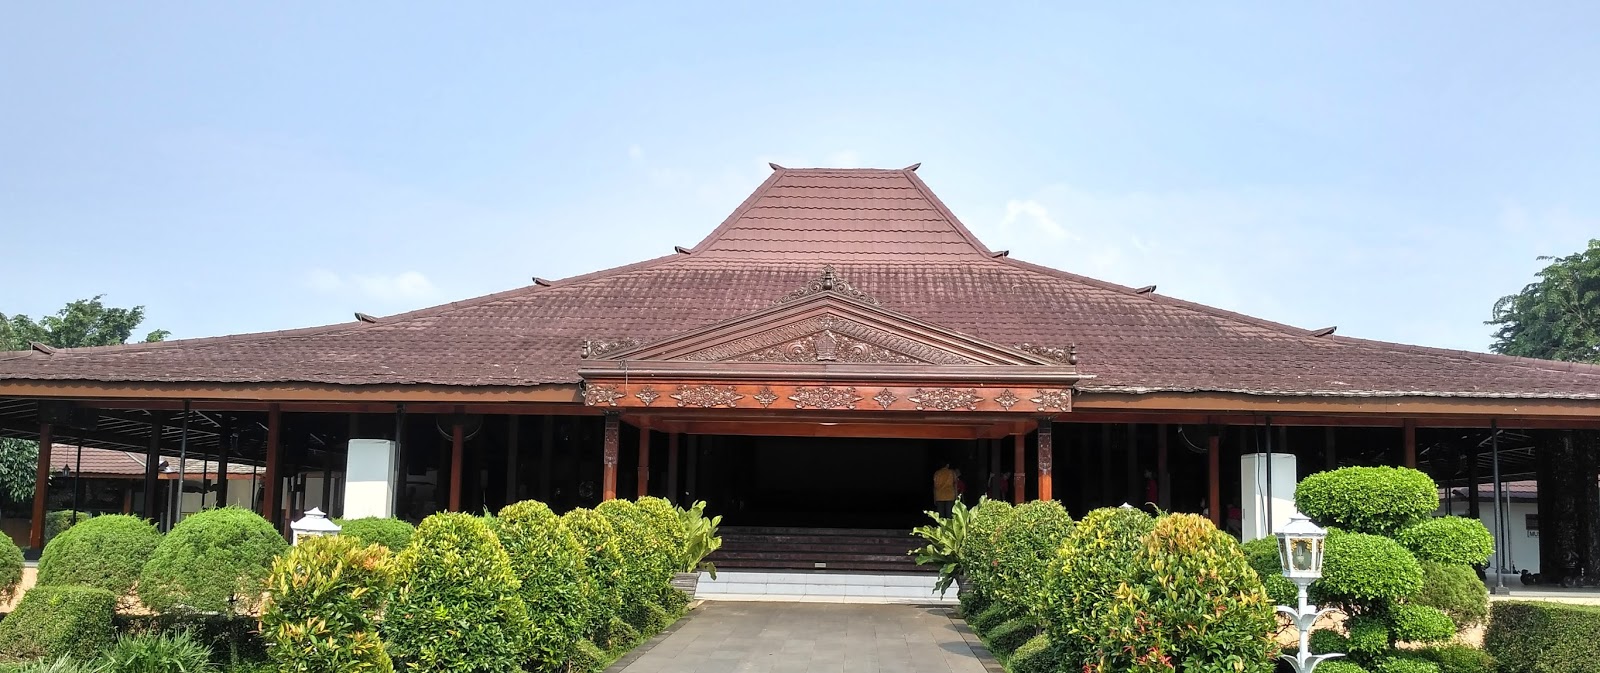  Denah  Rumah  Joglo Jawa  struktur rumah  tradisional 